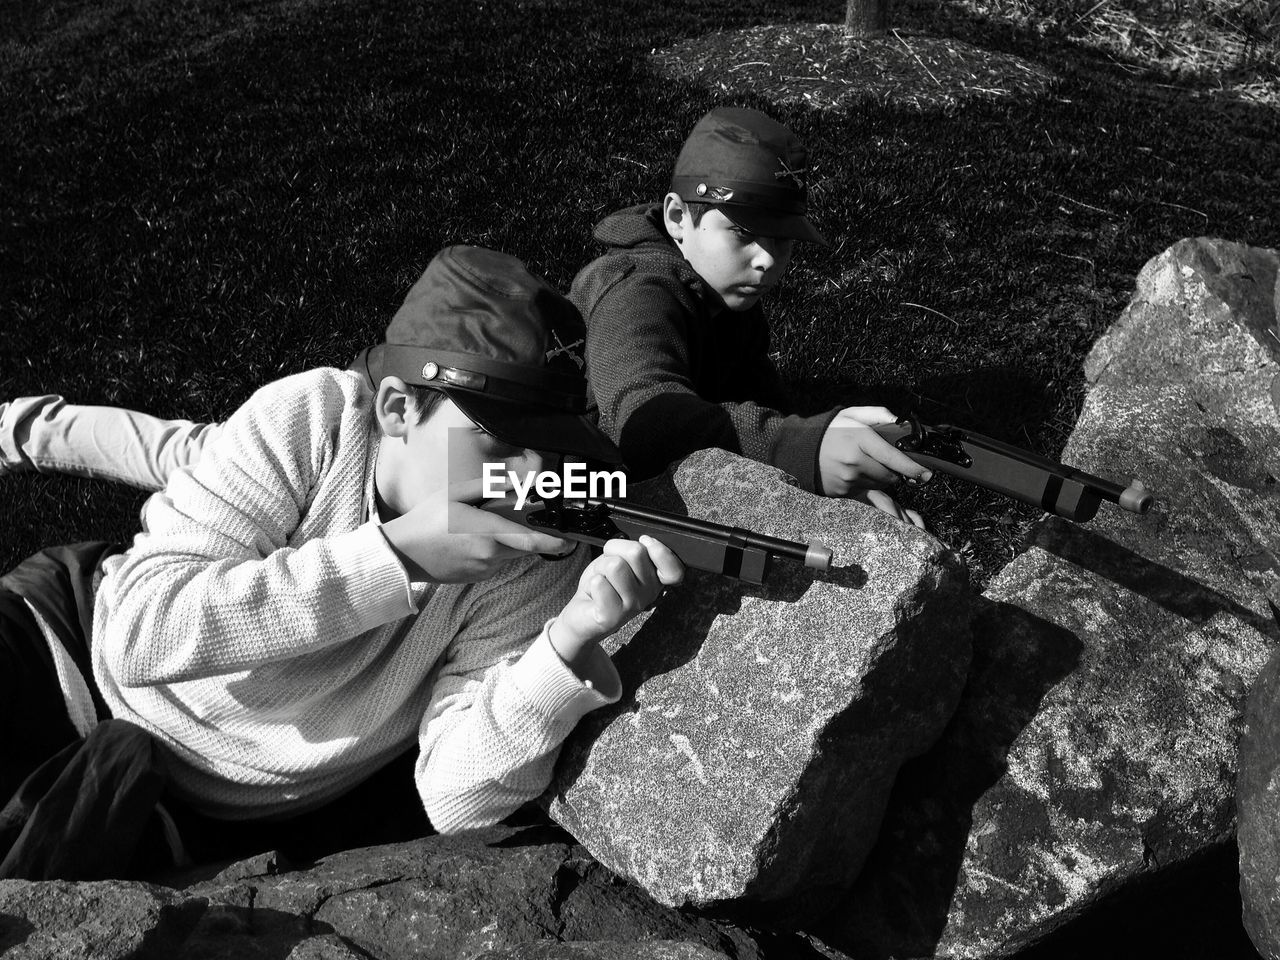 Boys shooting with toy handguns on rocks